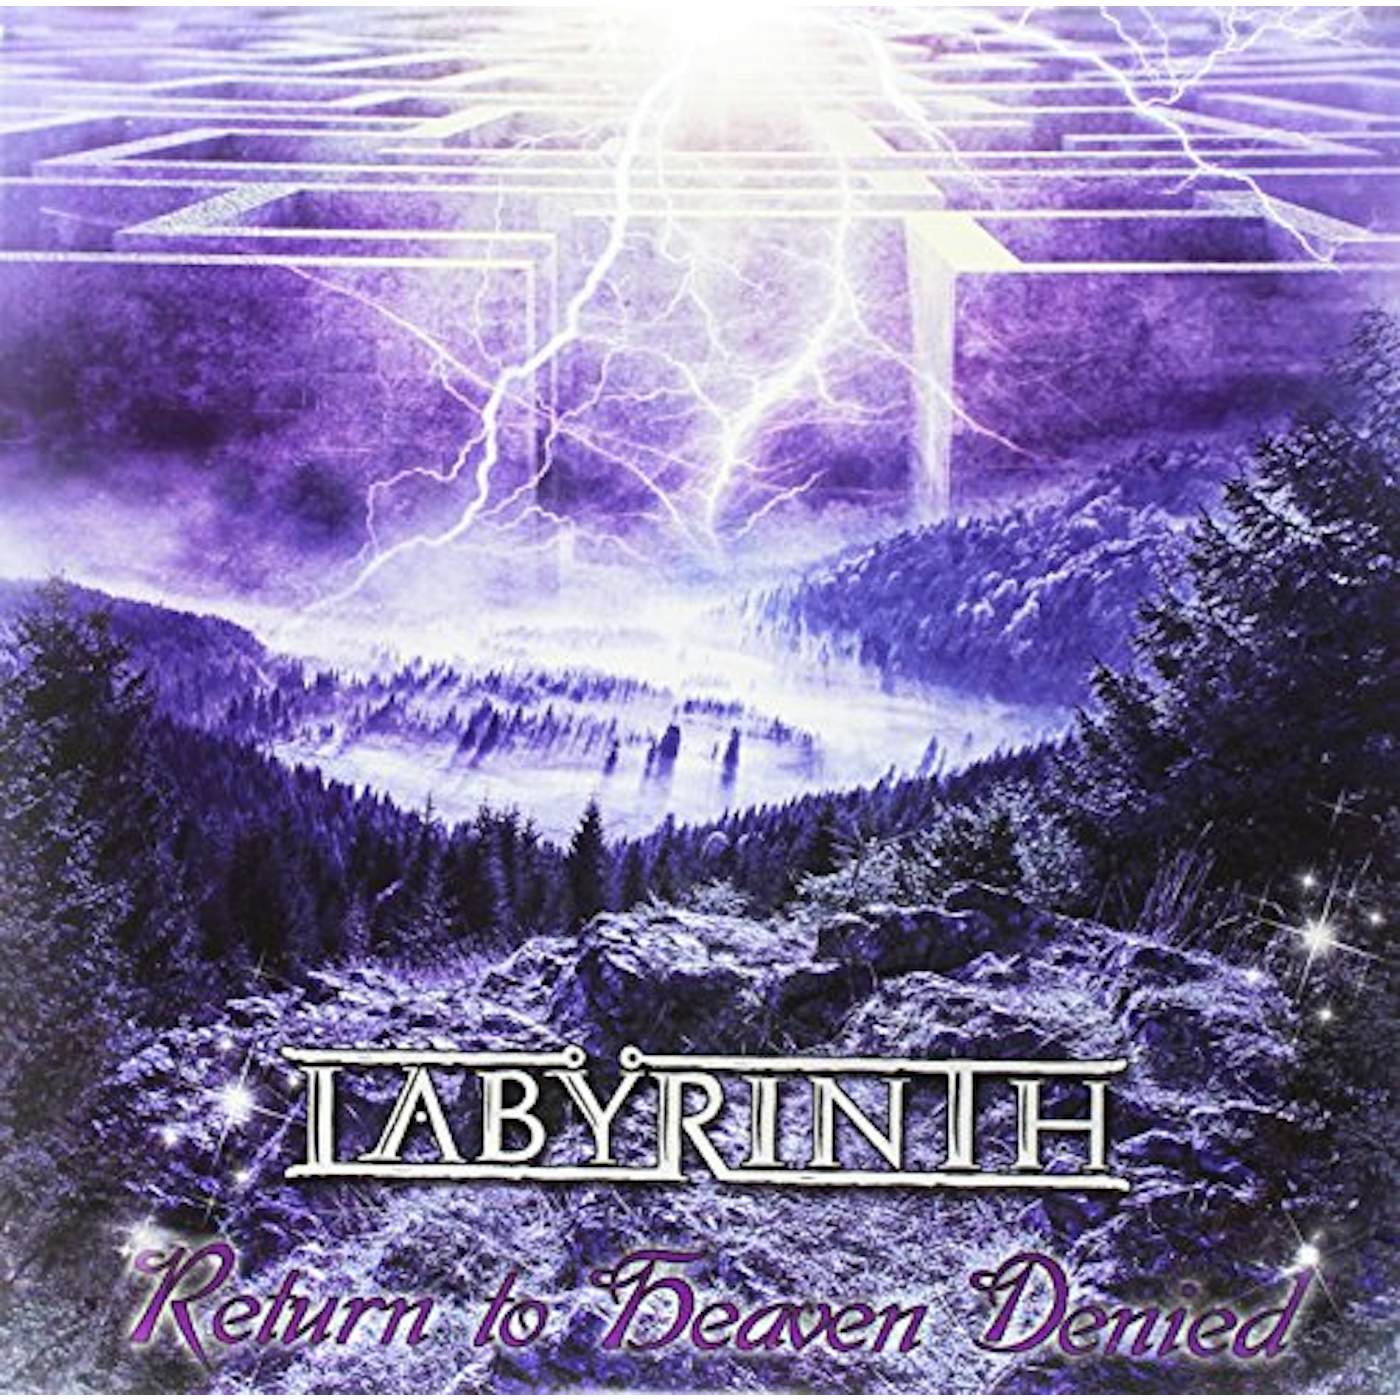 Labyrinth Return to Heaven Denied Vinyl Record